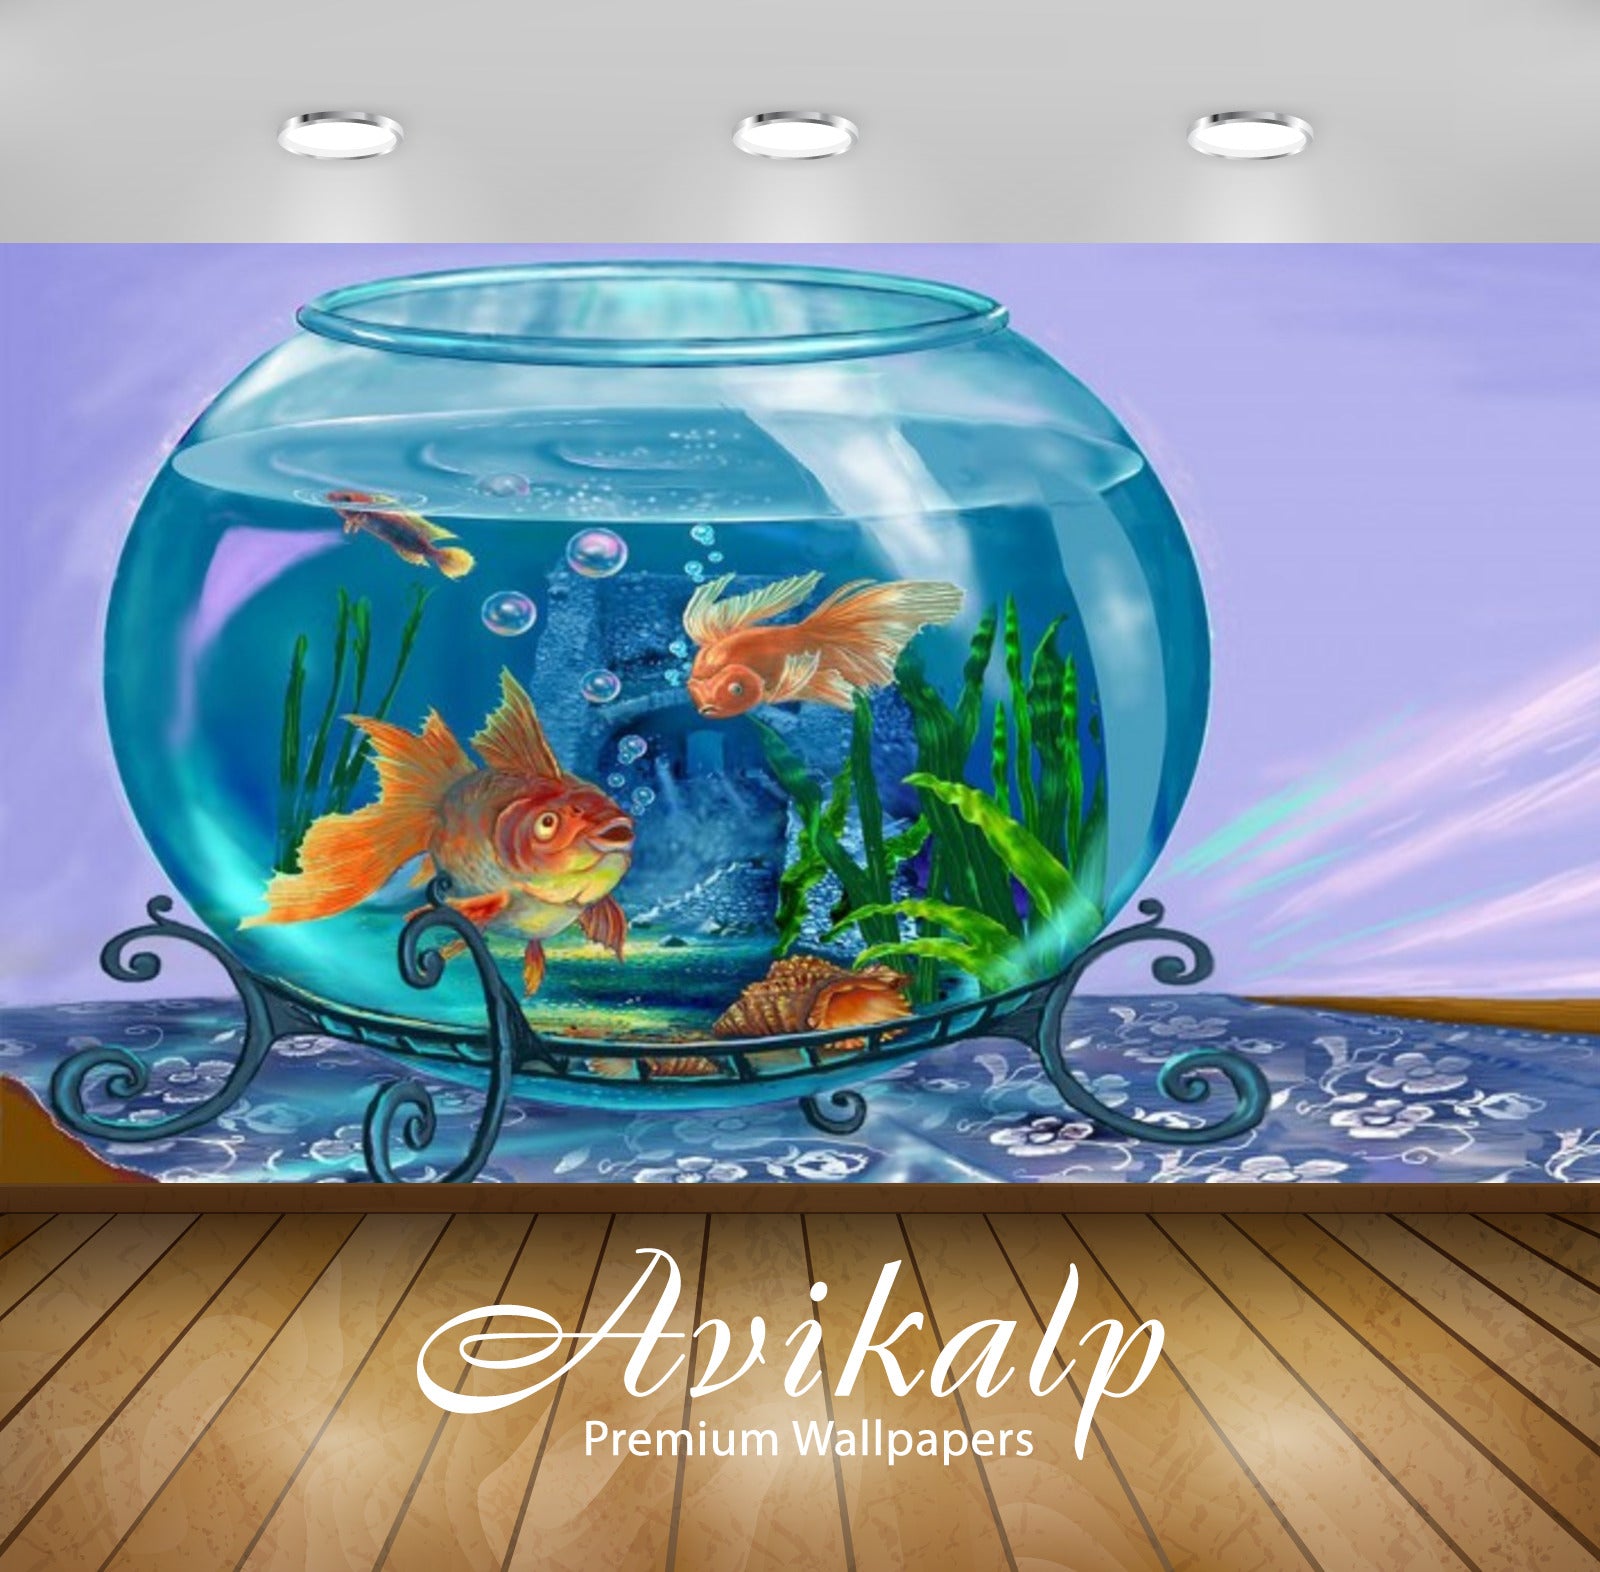 Avikalp Exclusive Awi2179 Beautiful landscape art red fish in aquarium Full HD Wallpapers for Living